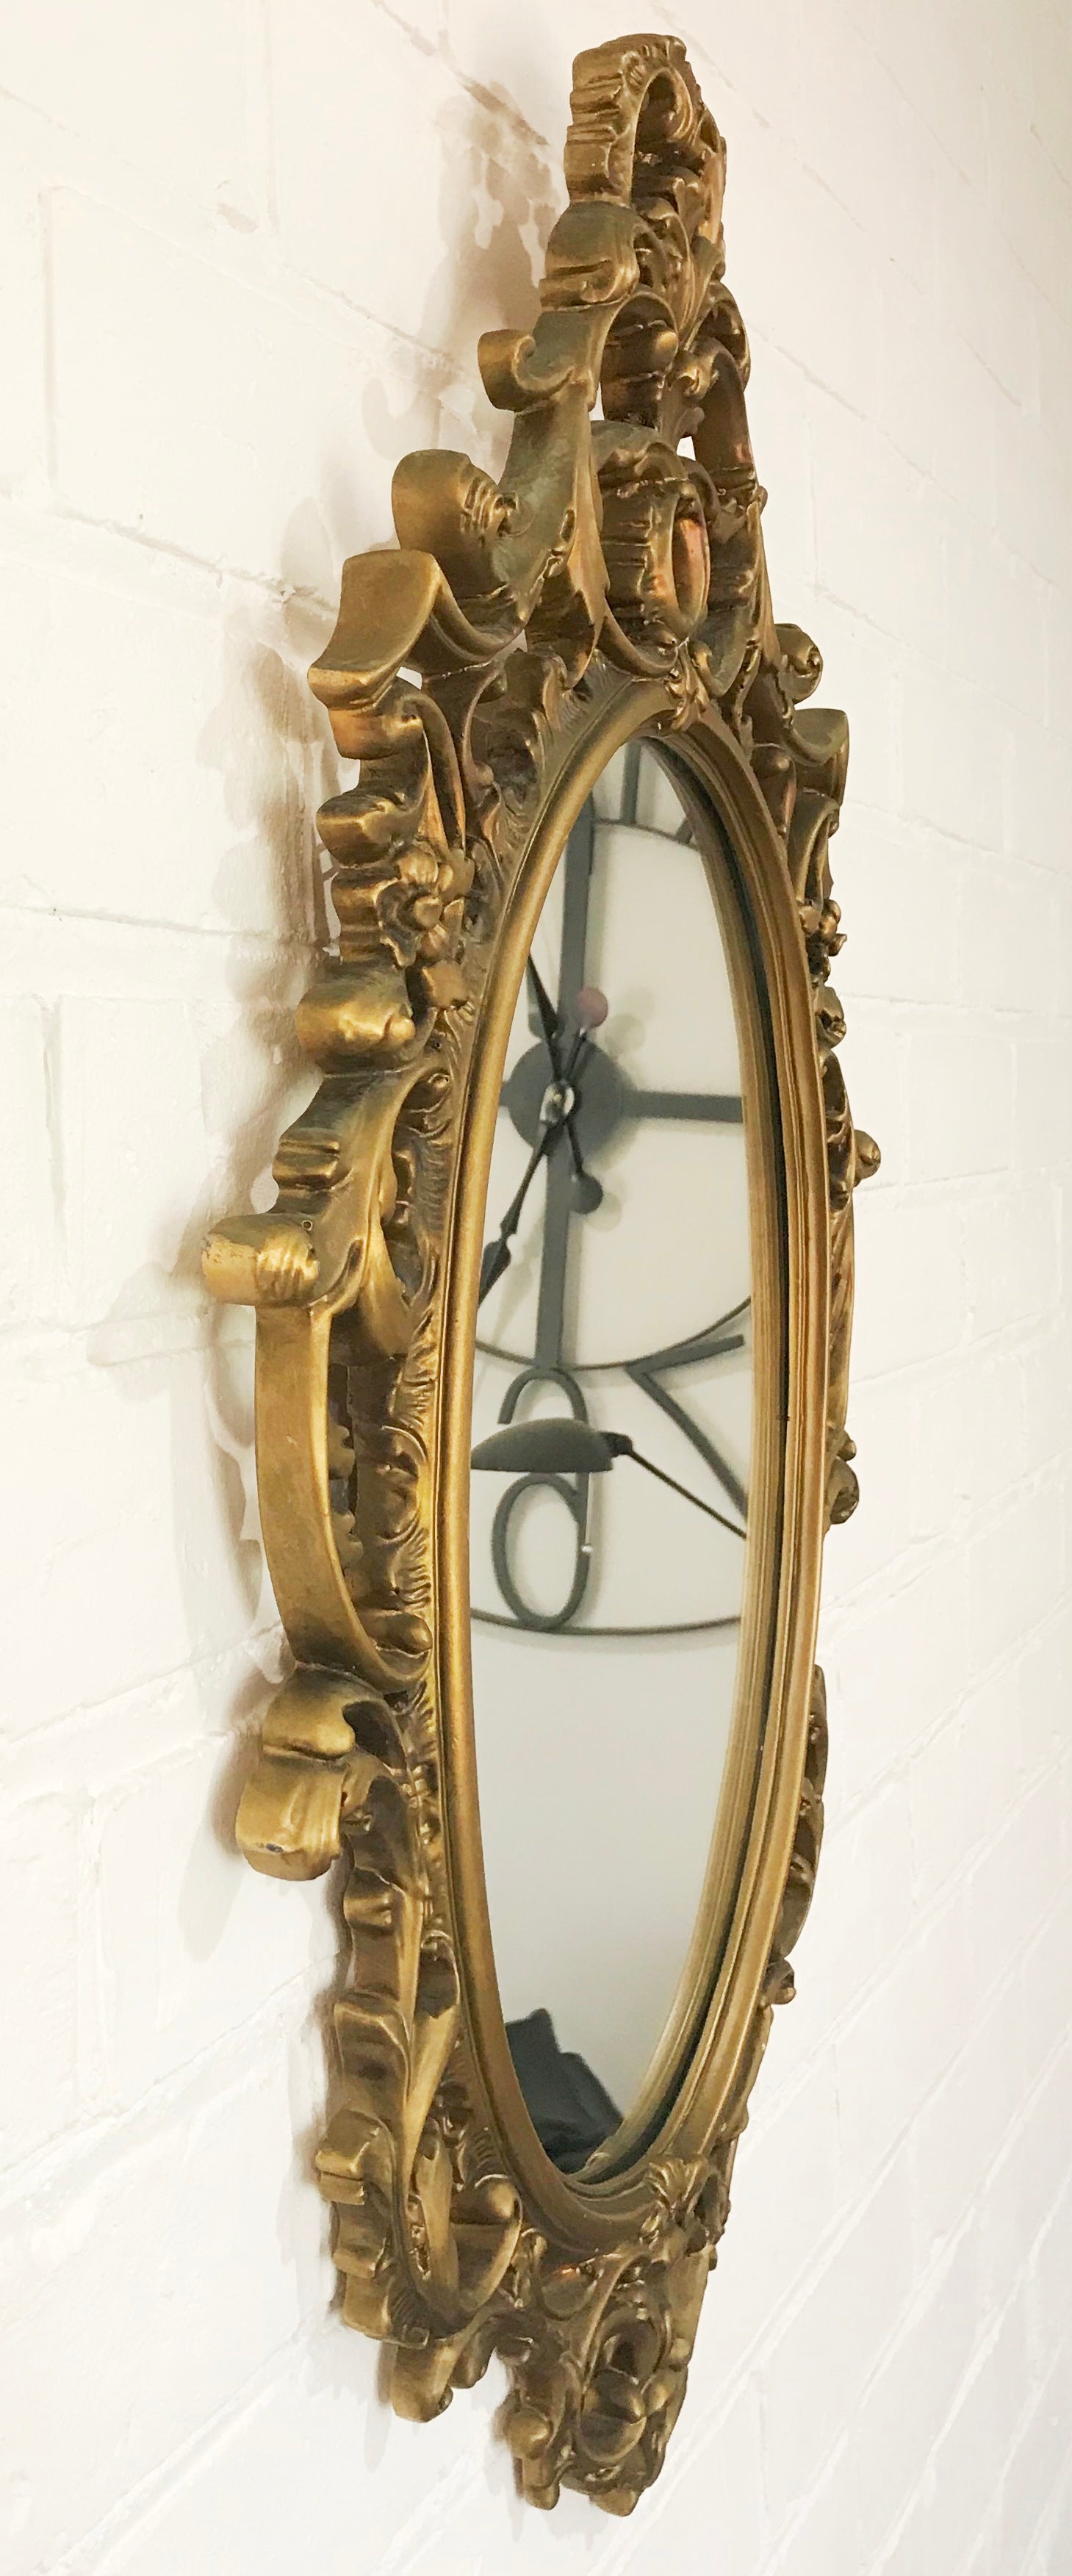 Original Vintage Ornate Gold Mirror | eXibit collection